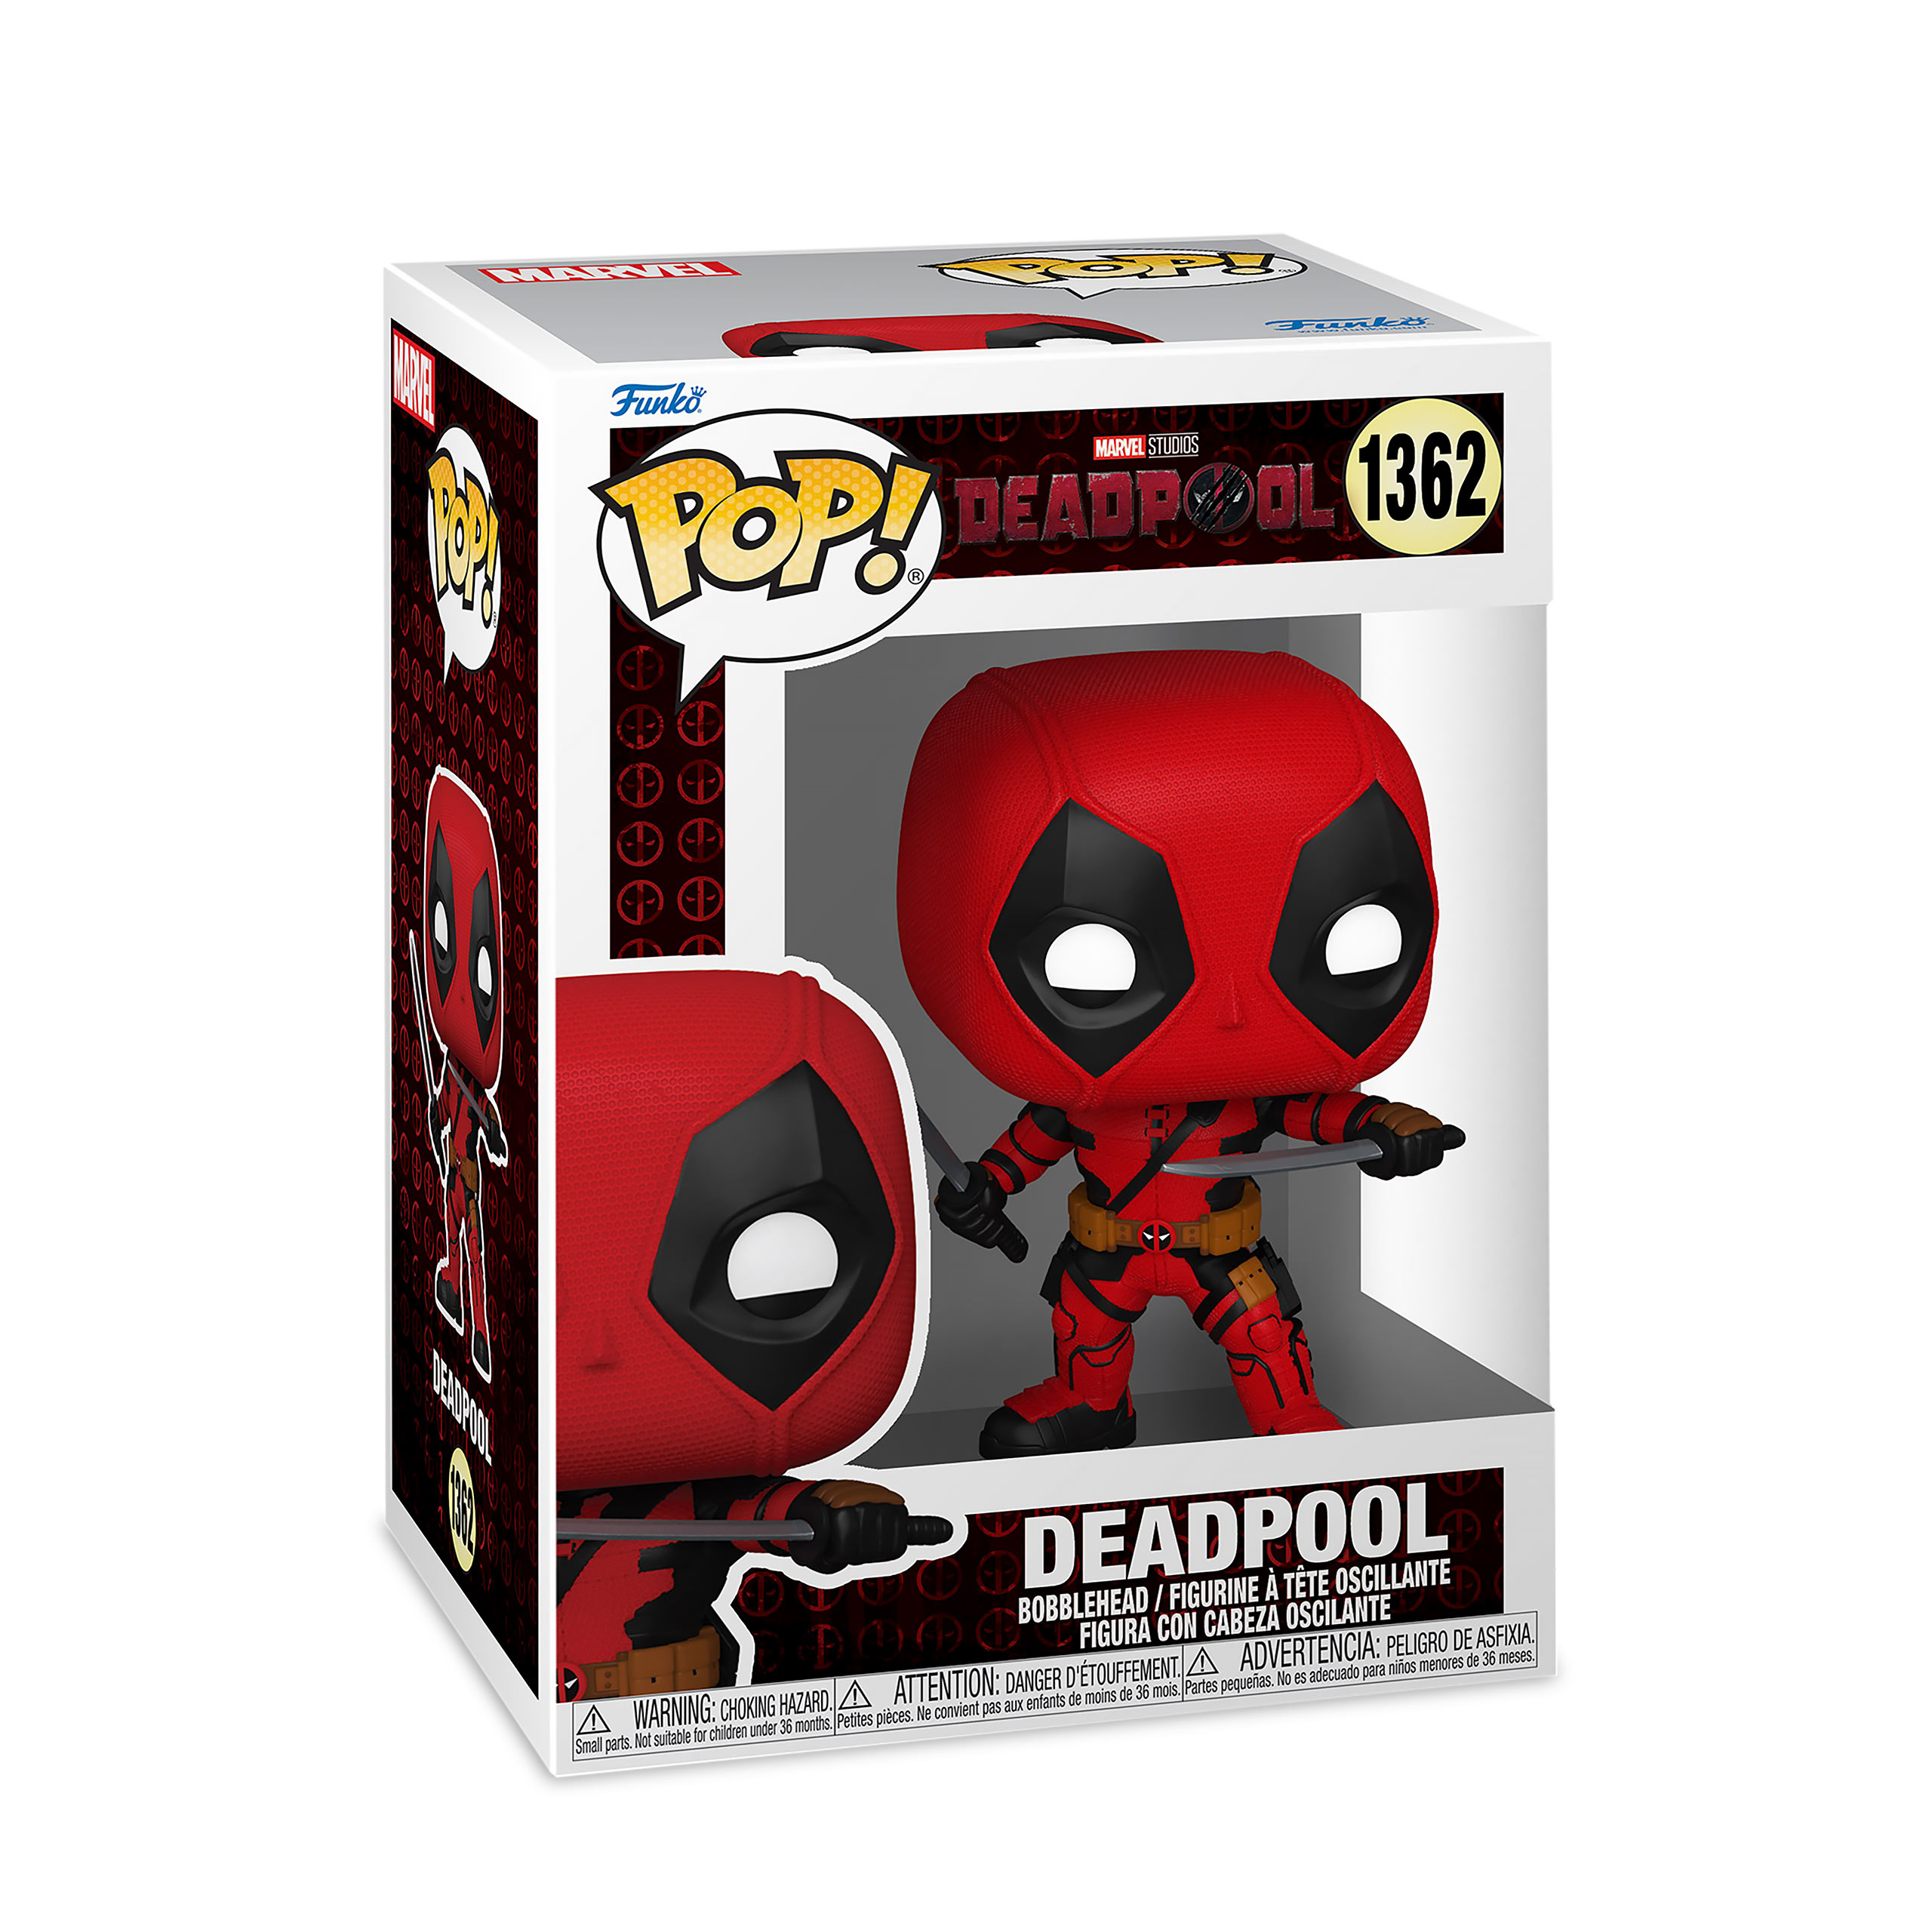 Deadpool 3 - Funko Pop Bobblehead Figure